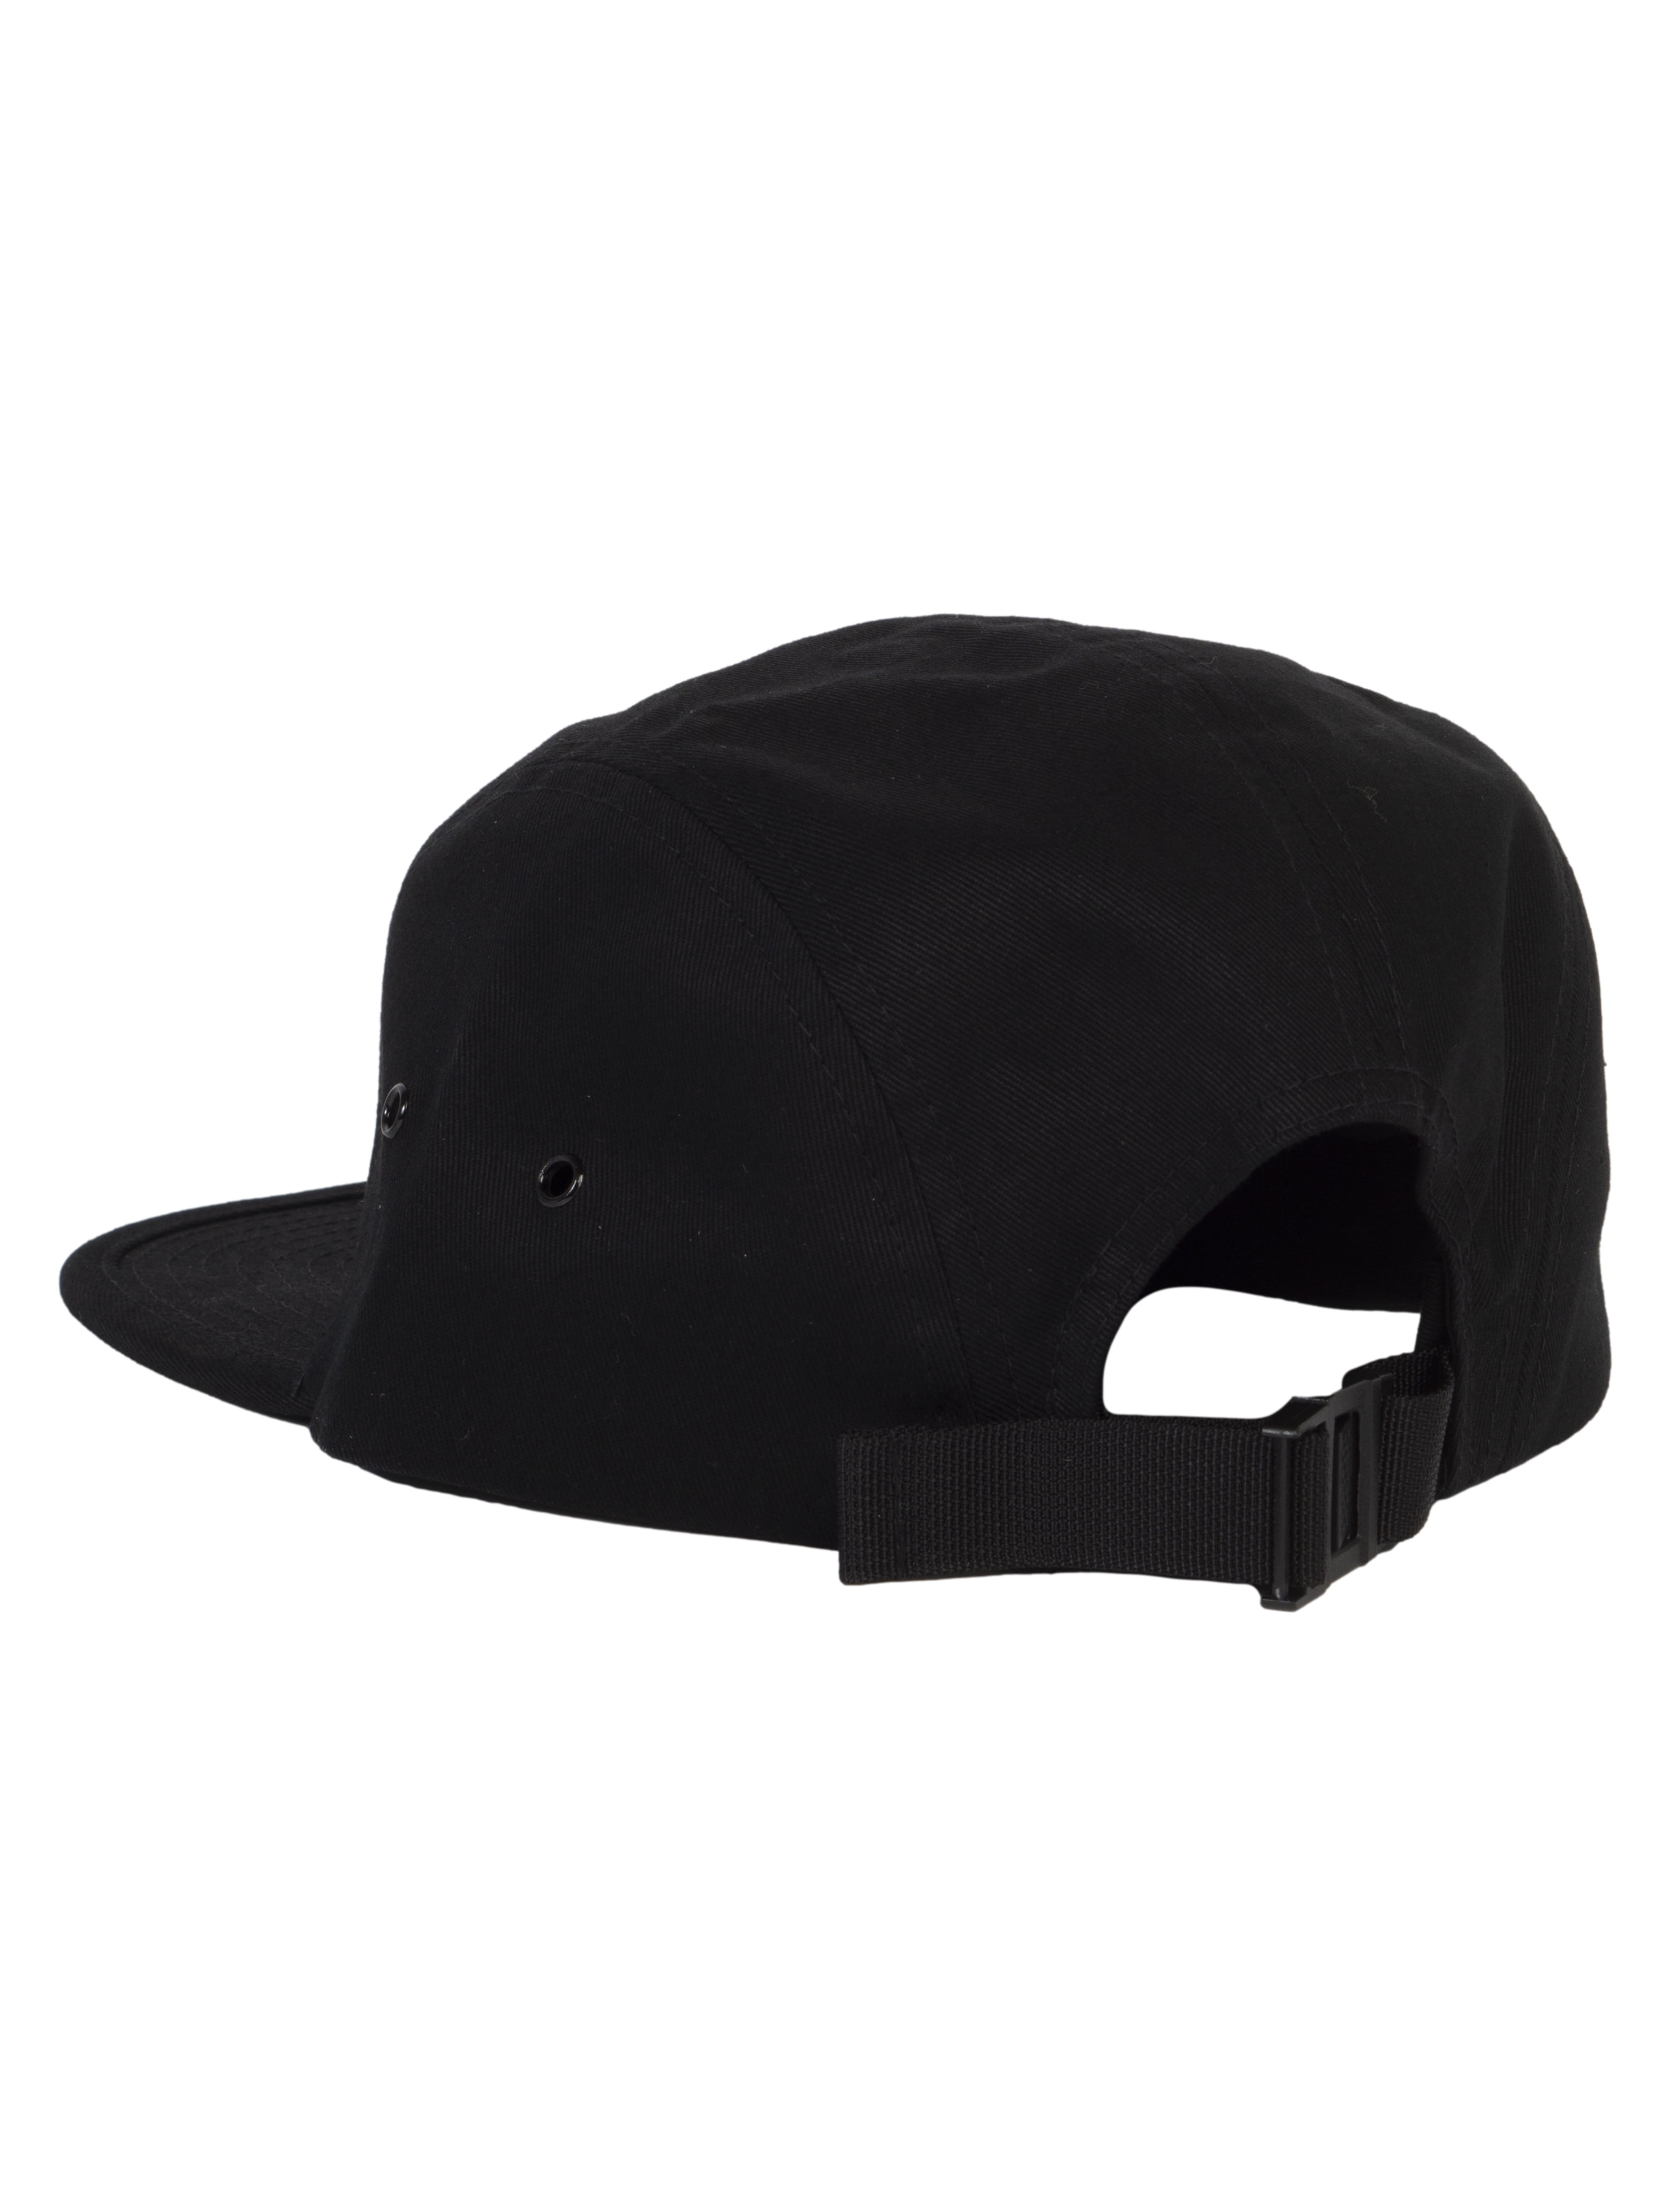 5 Baseball Panel Bill For Flat Top Black Classic Jockey Headwear Cap Men Hat